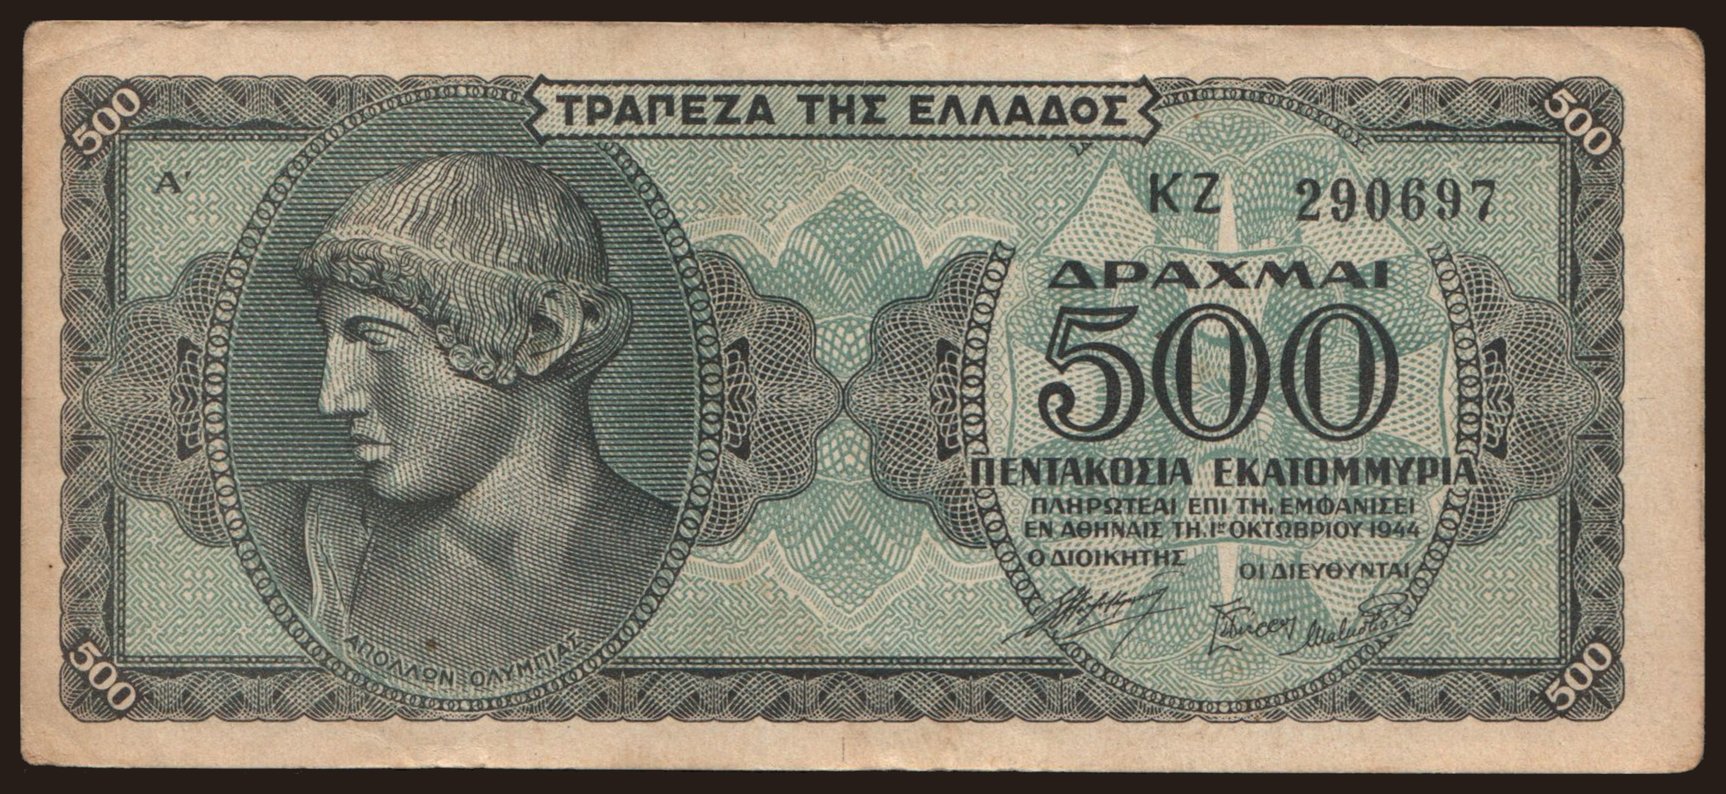 500.000.000 drachmai, 1944